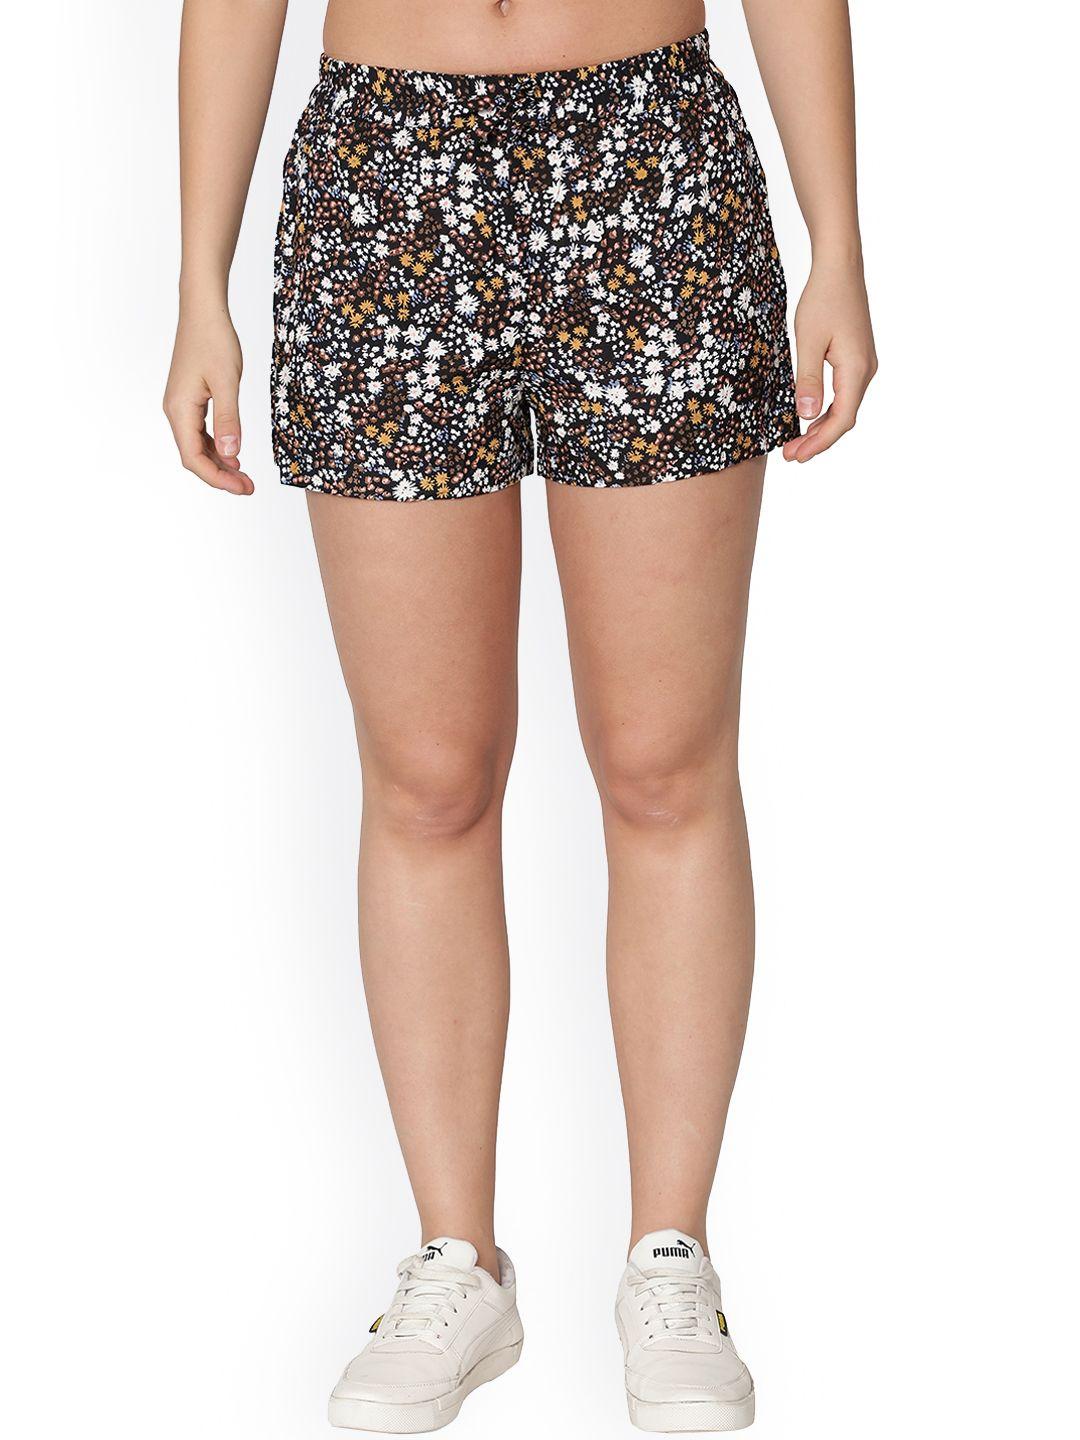 nuevosdamas women mid-rise floral printed shorts